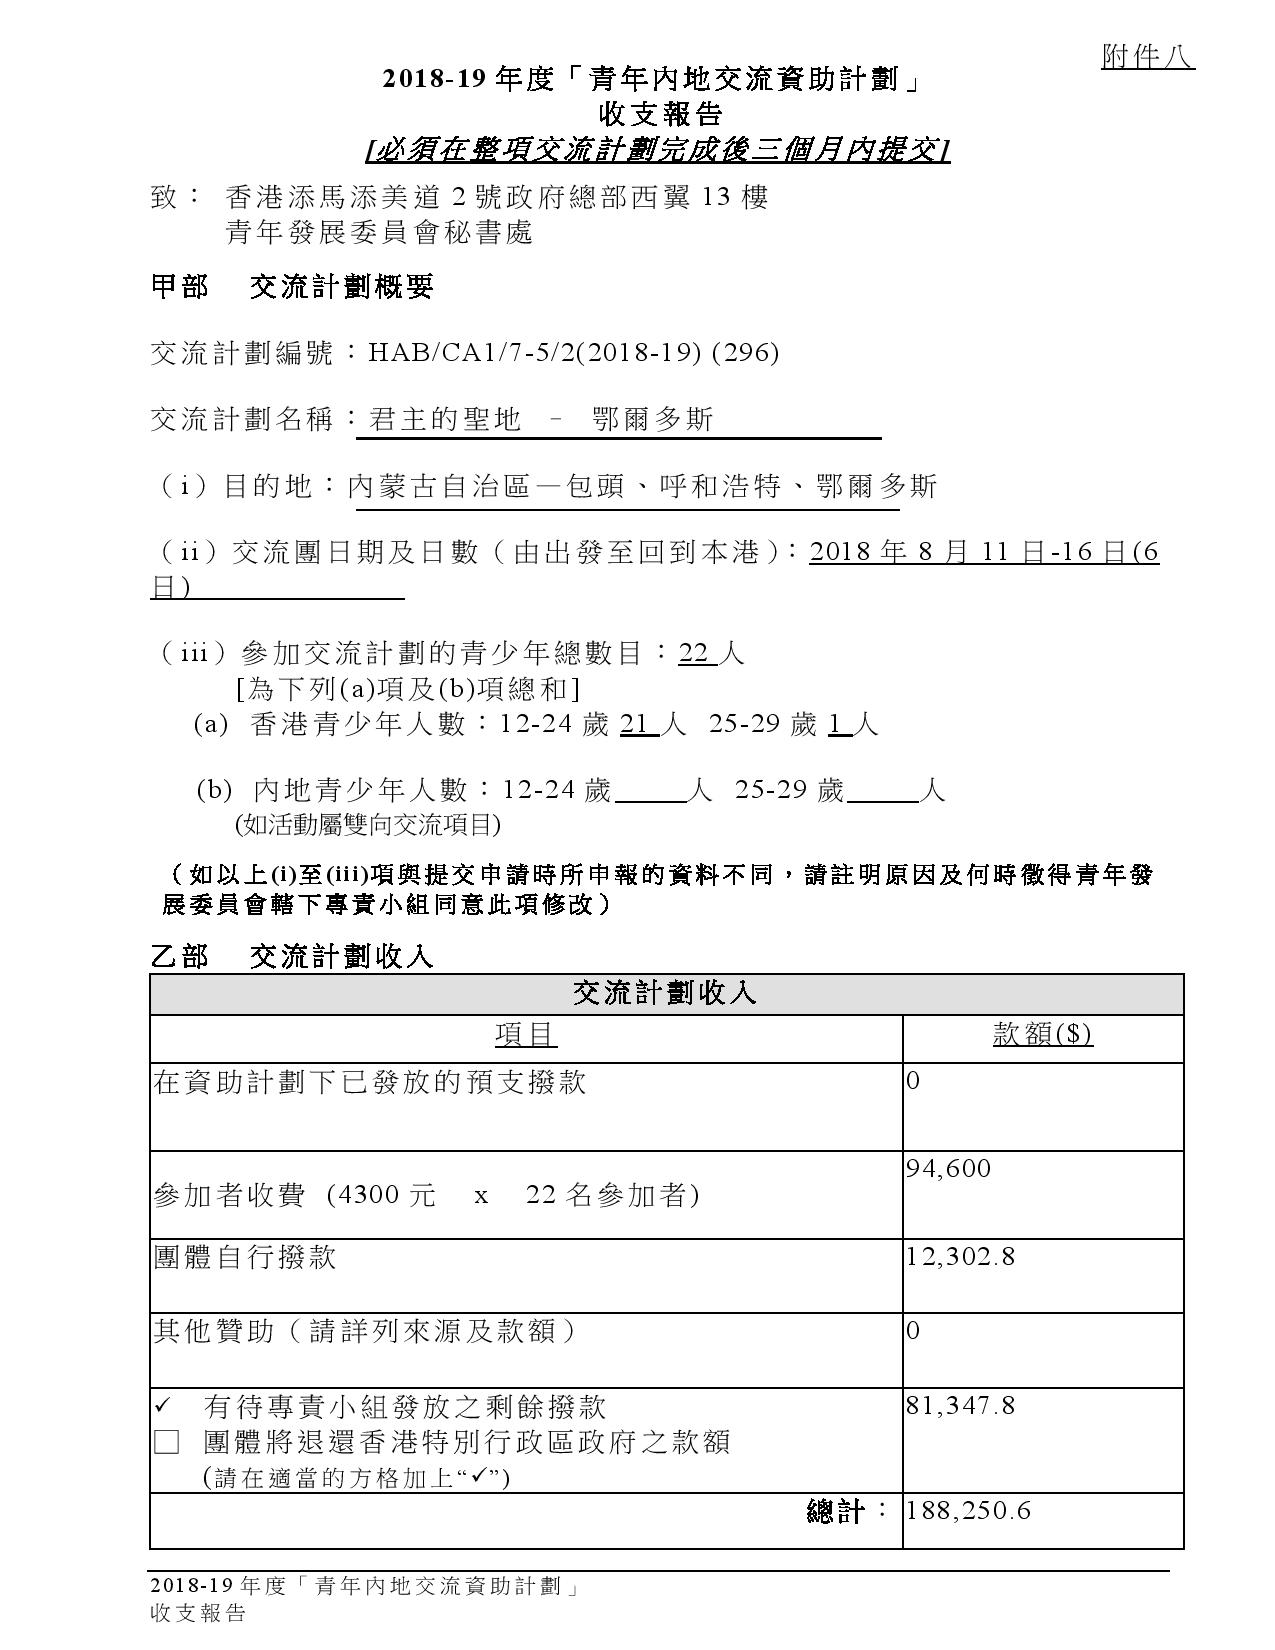 HKCFA_君主附件八 - 收支報告 (1)-page-001(P.1).jpg